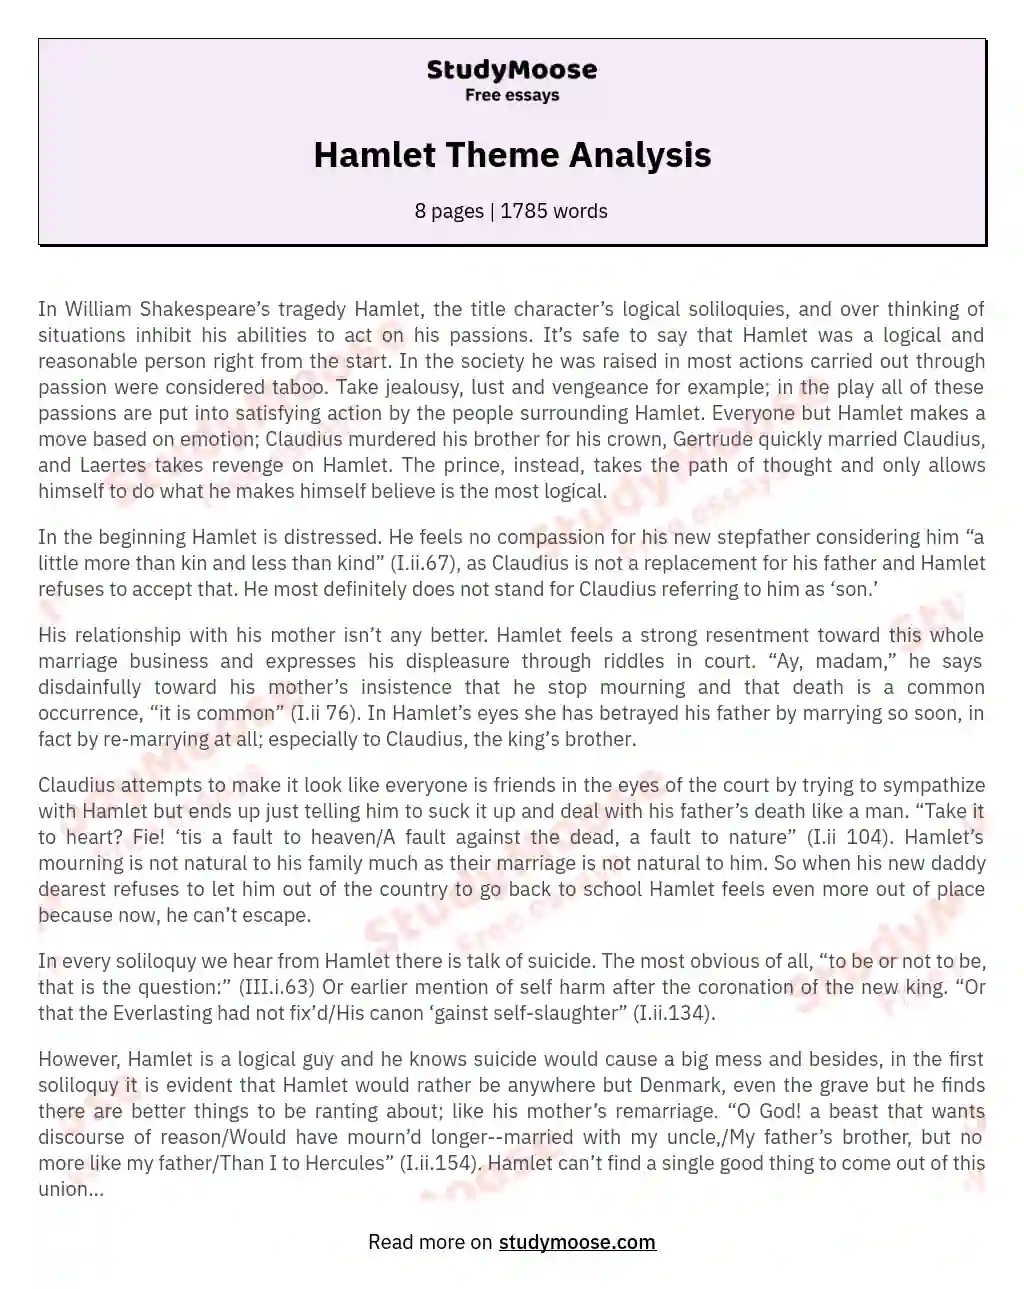 Hamlet Theme Analysis essay